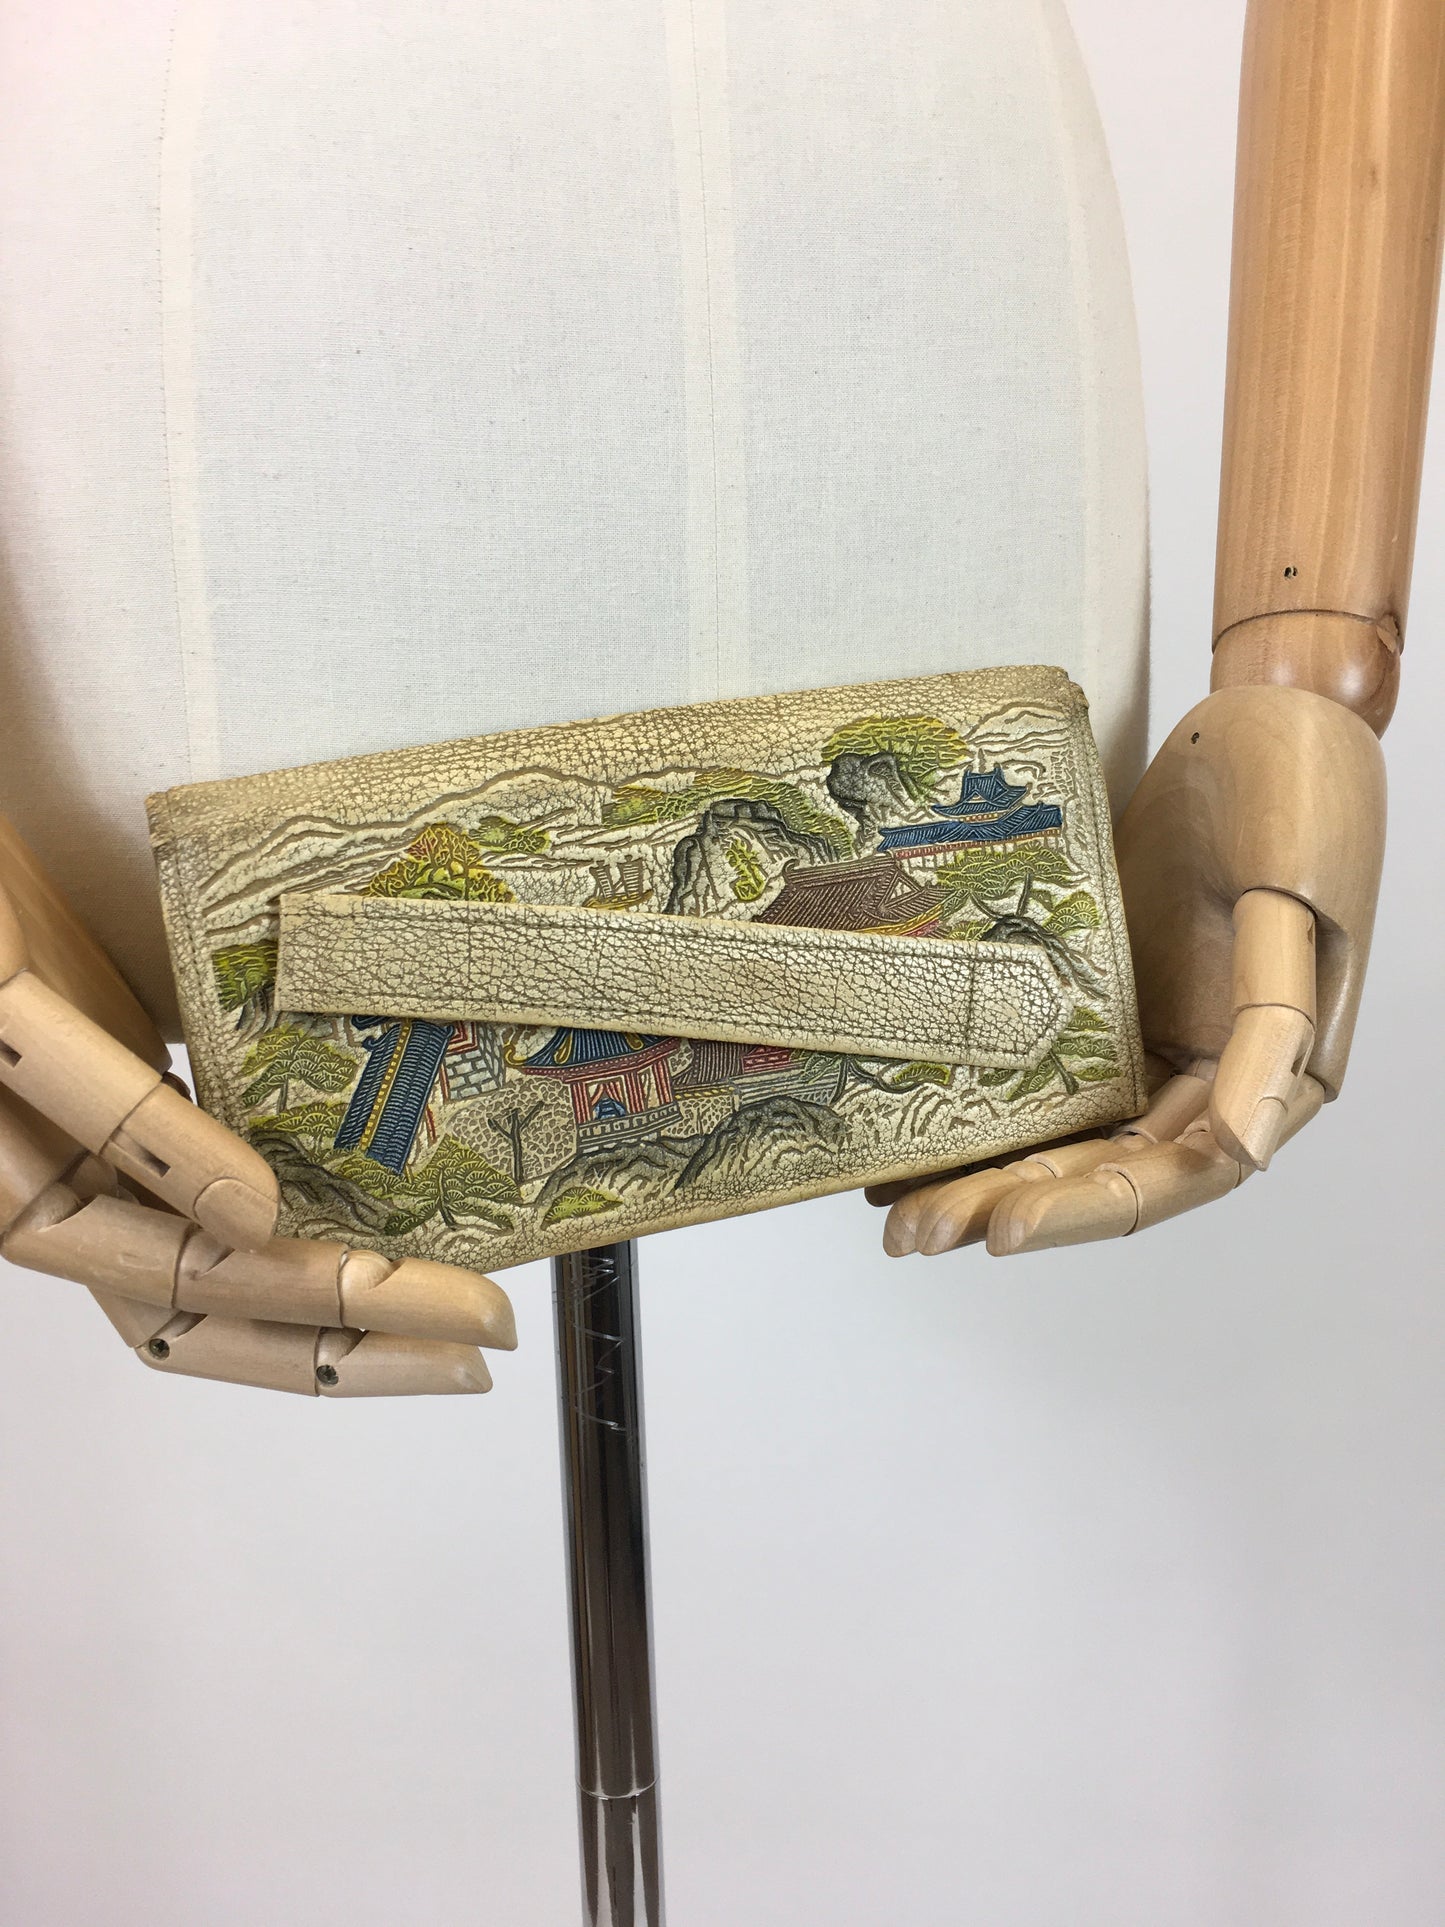 Original 1920’s / 1930’s Exquisite Tourist Clutch Handbag - With Celluloid Monkey Adornment